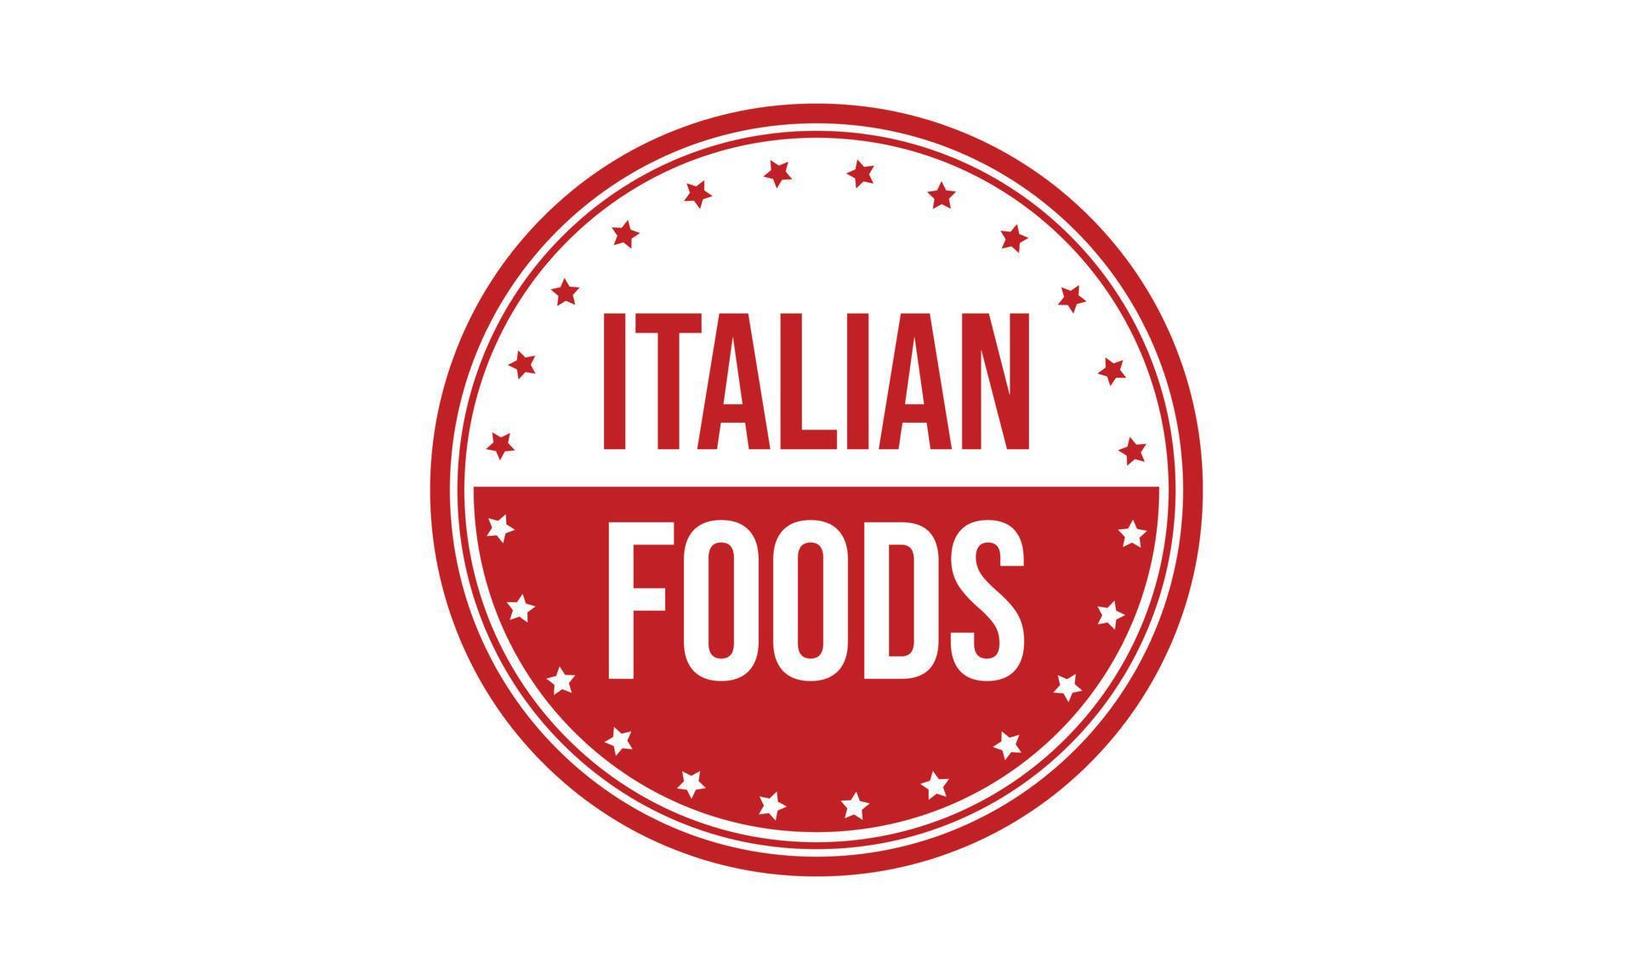 Italian Foods Rubber Stamp Seal Vector